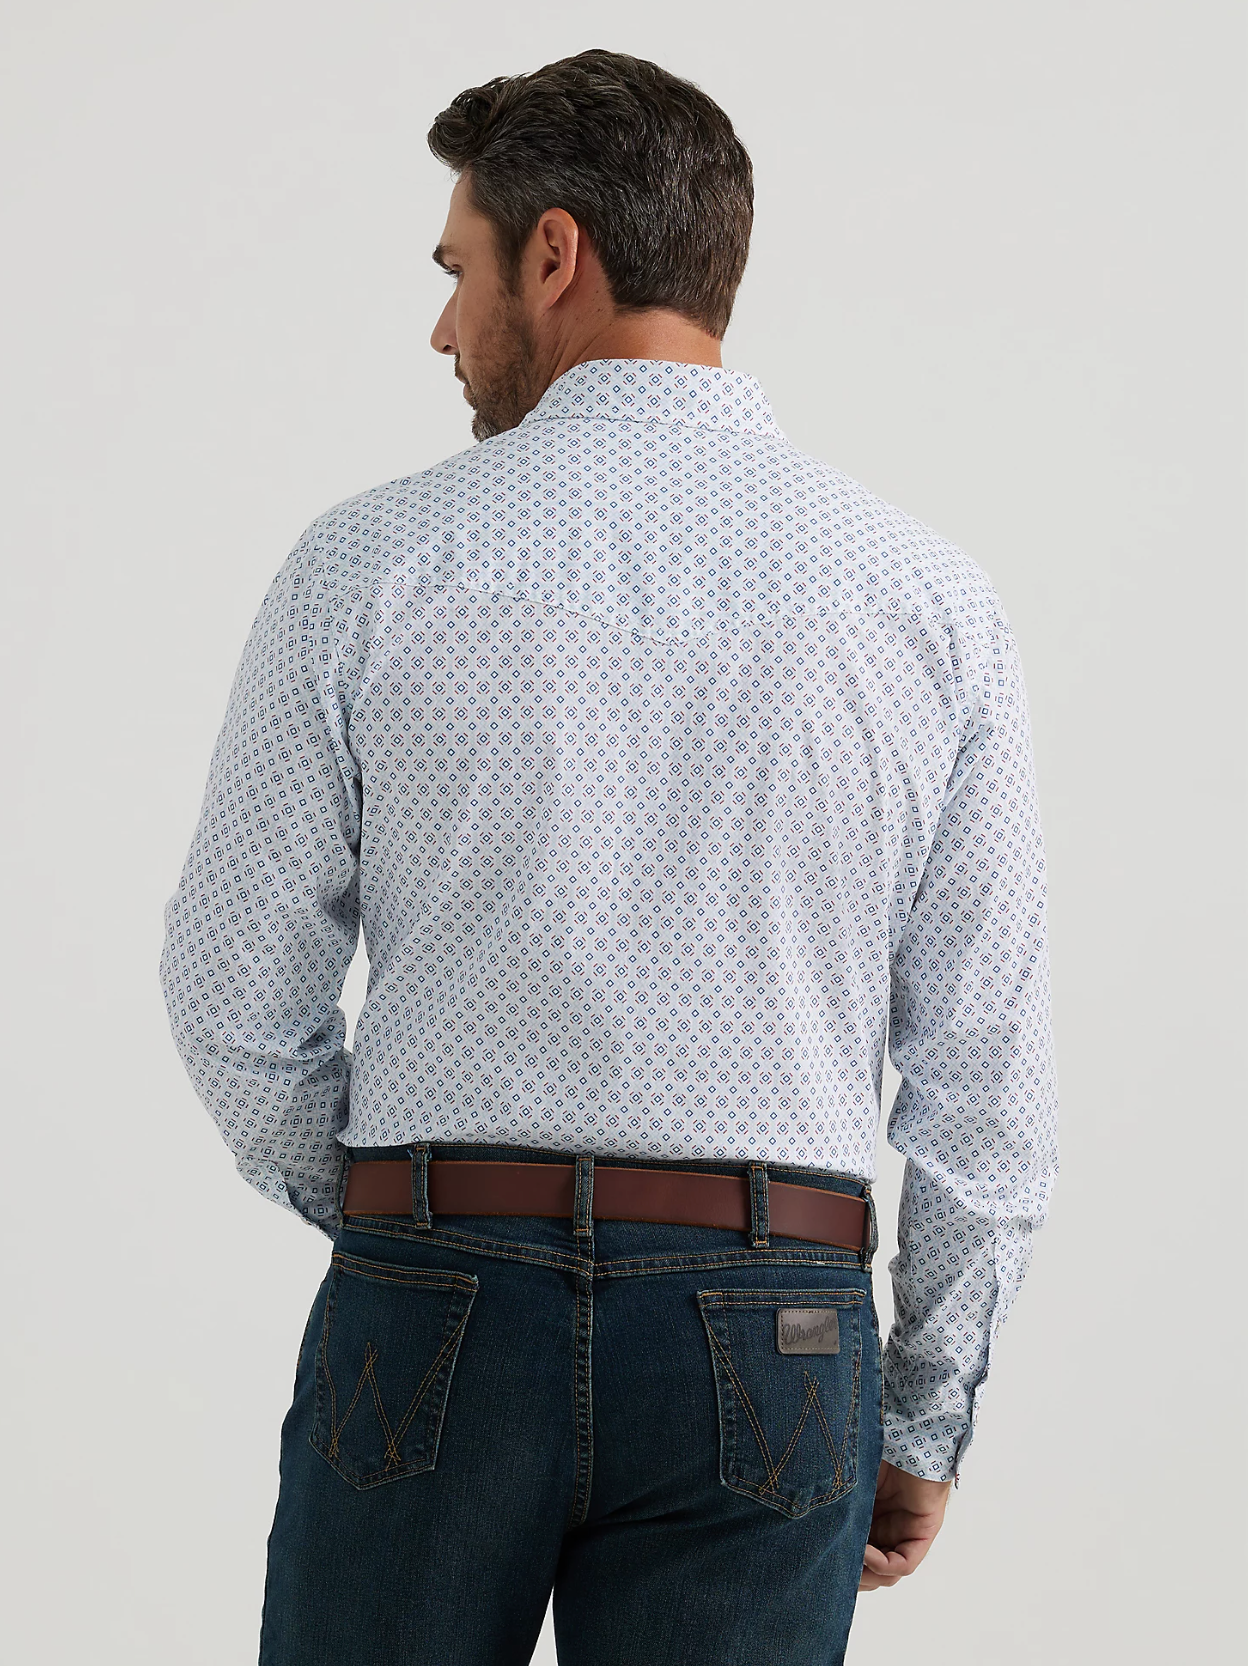 Wrangler 20X Advanced Comfort Long Sleeve Shirt